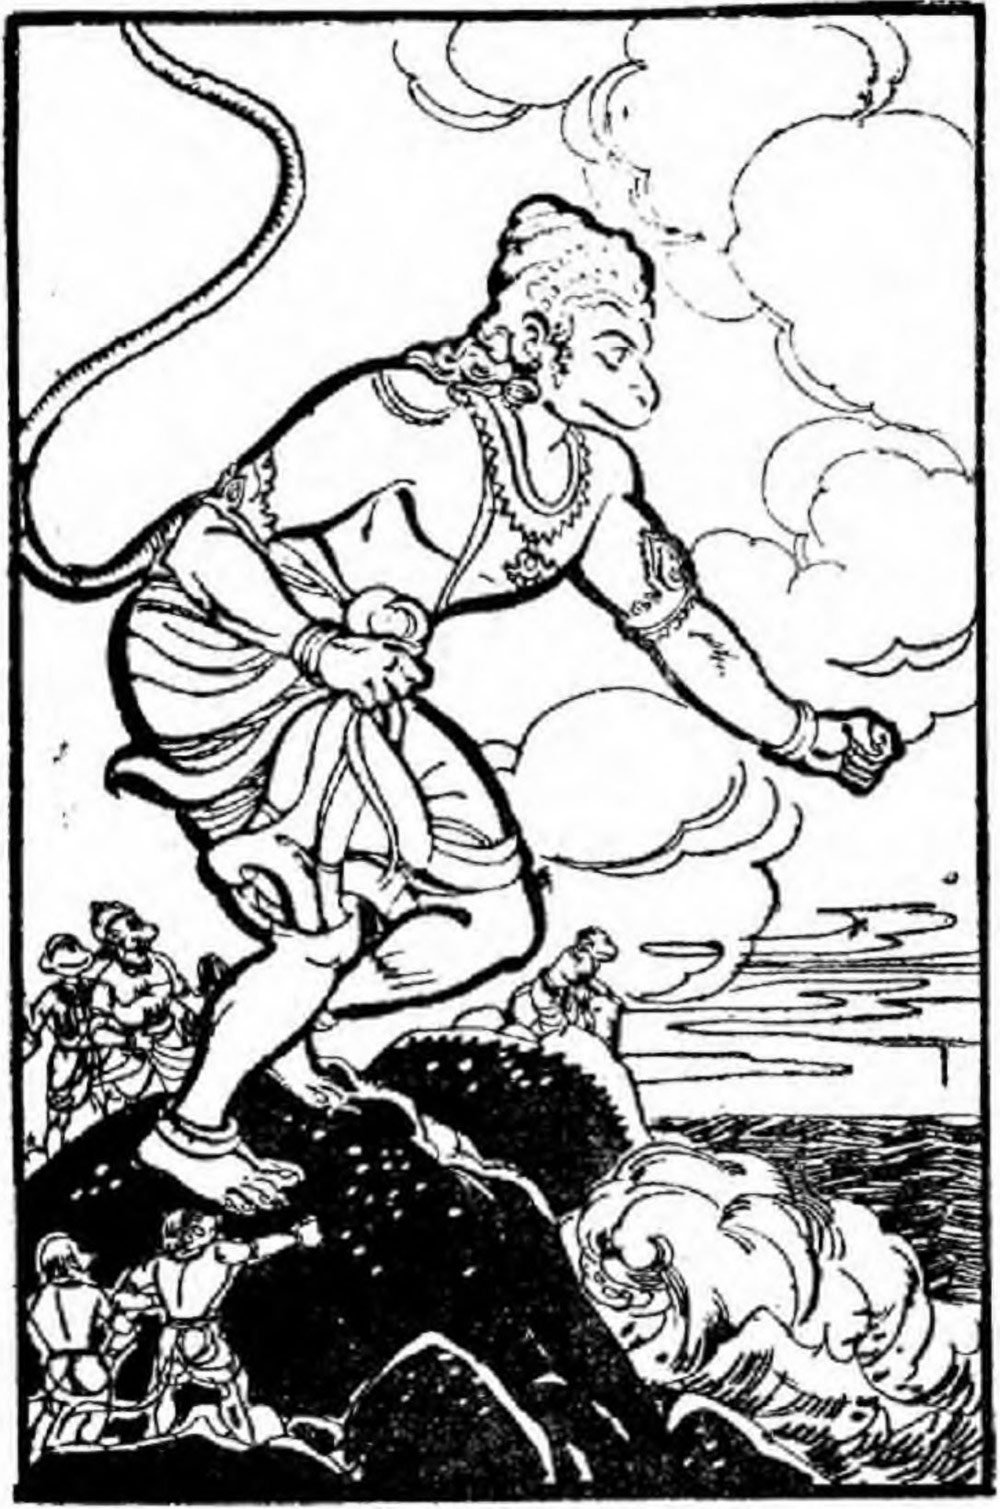 Children’s Illustrated Ramayana: Figure 34